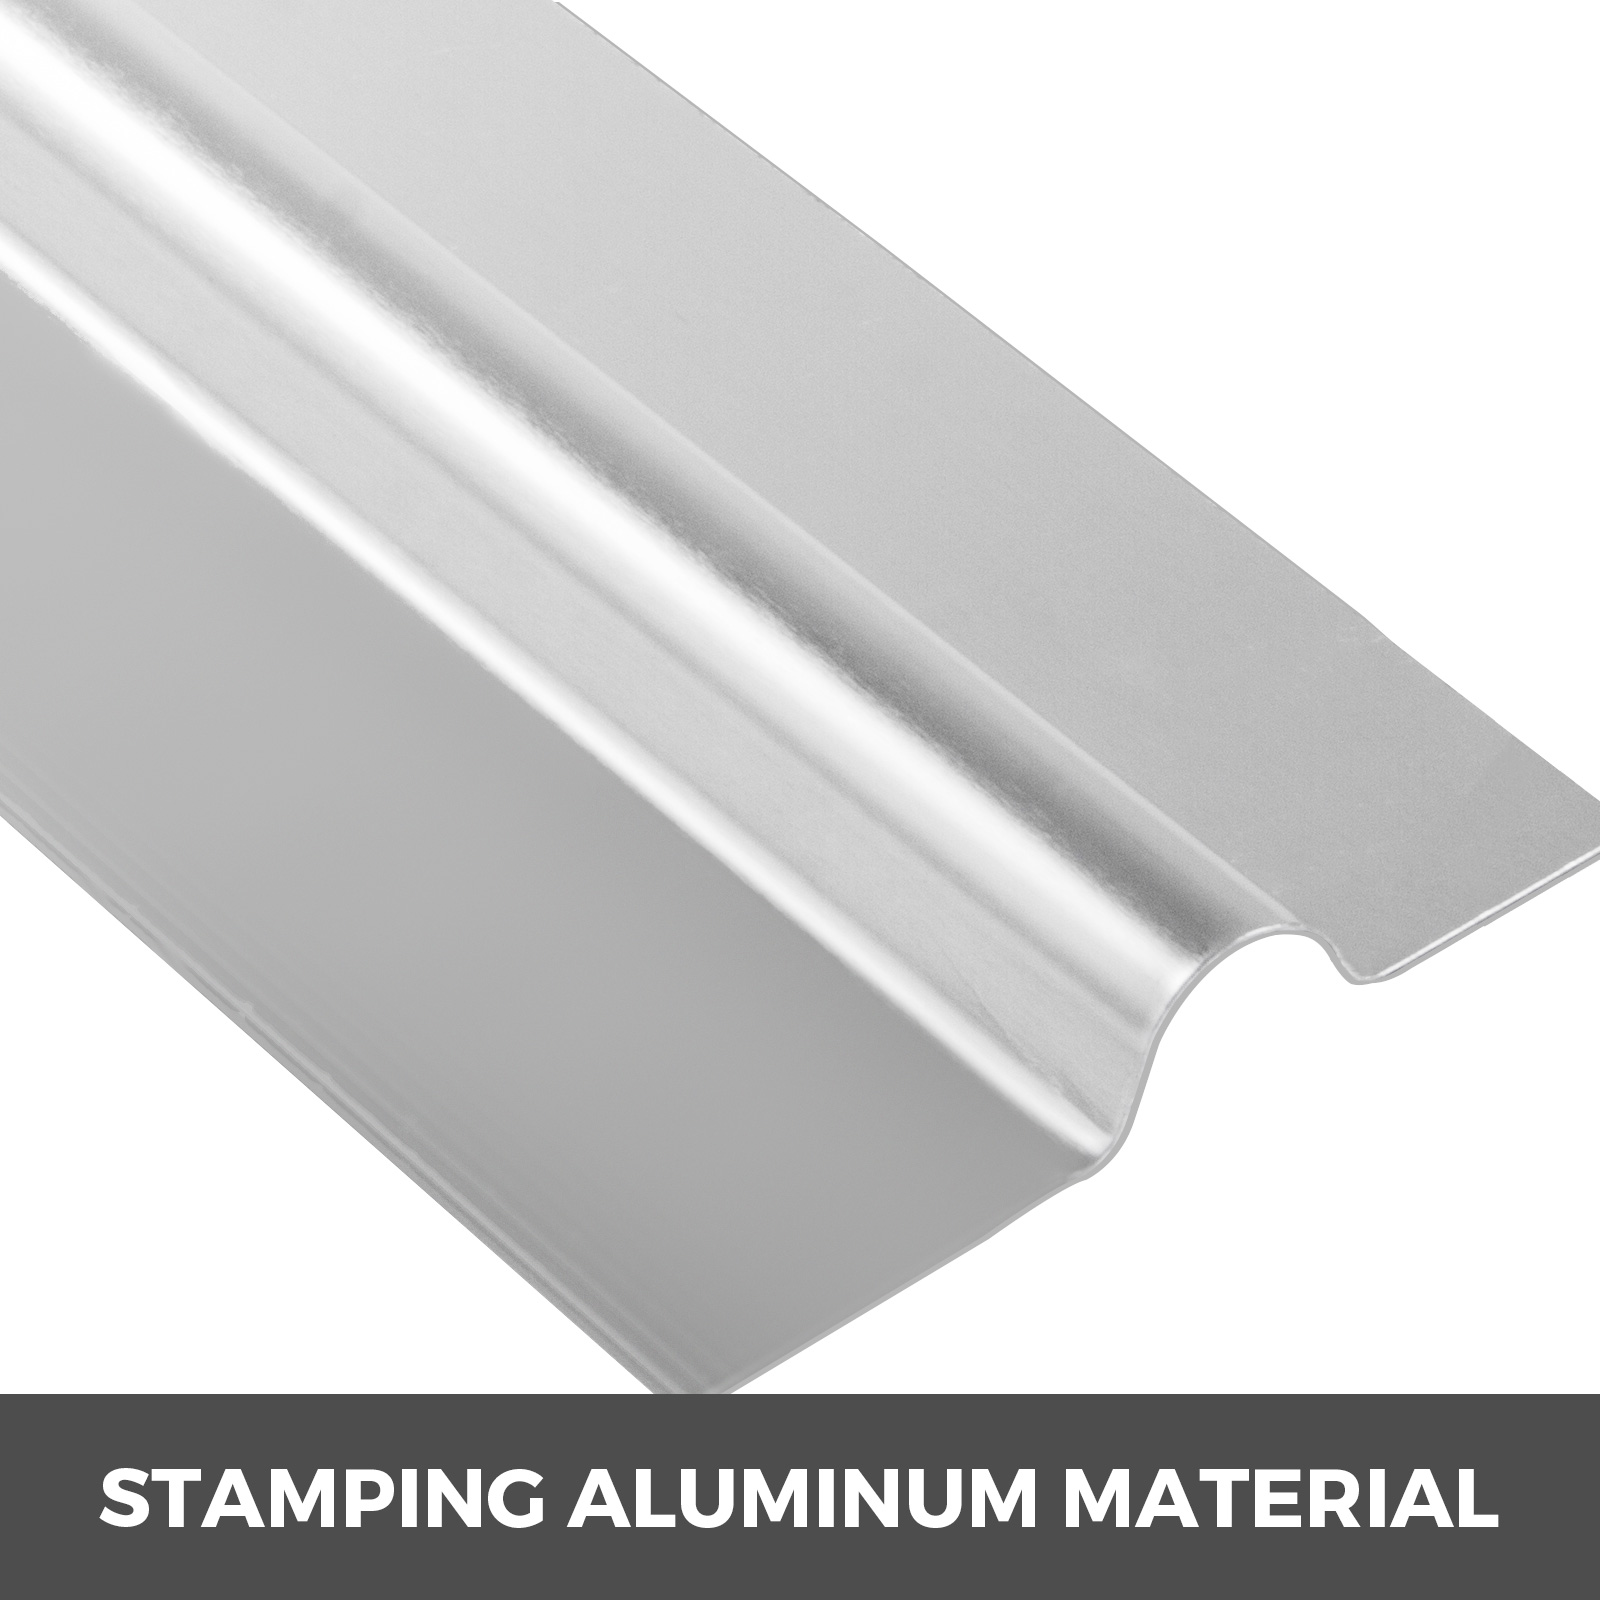 Extruded Aluminum Radiant Heat Transfer Plates for 1/2 PEX Tubing -  PexUniverse